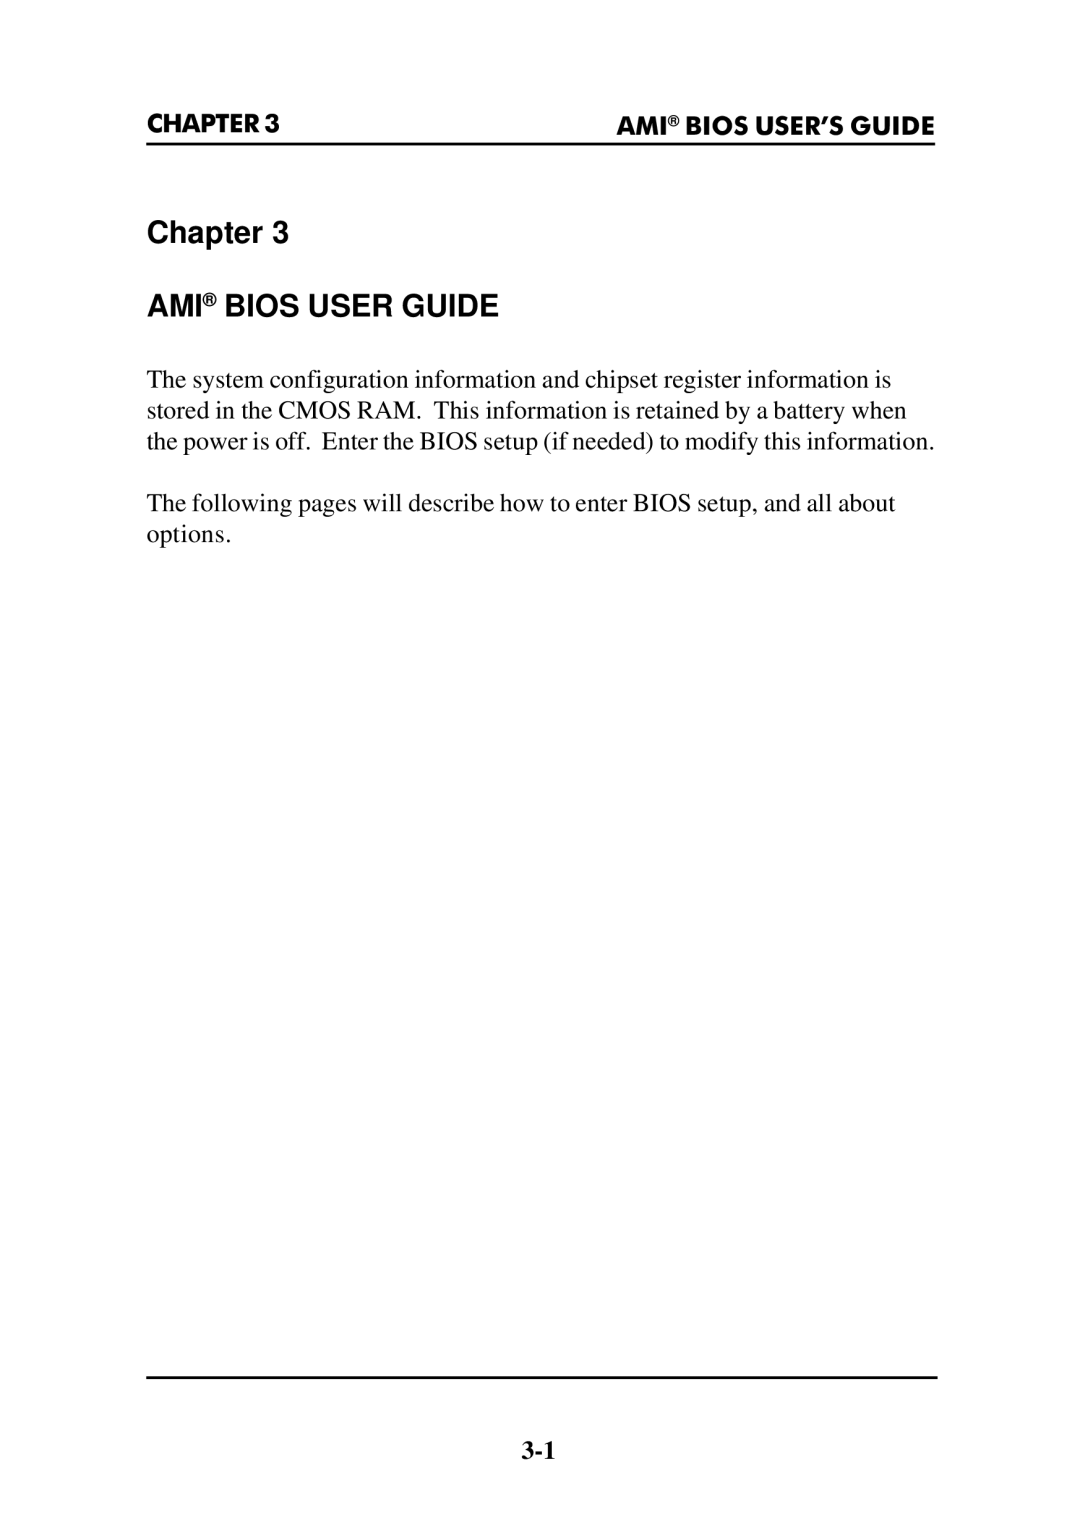 Intel MS-6112 manual Chapter AMI BIOS USER GUIDE, Ami Bios User’S Guide 